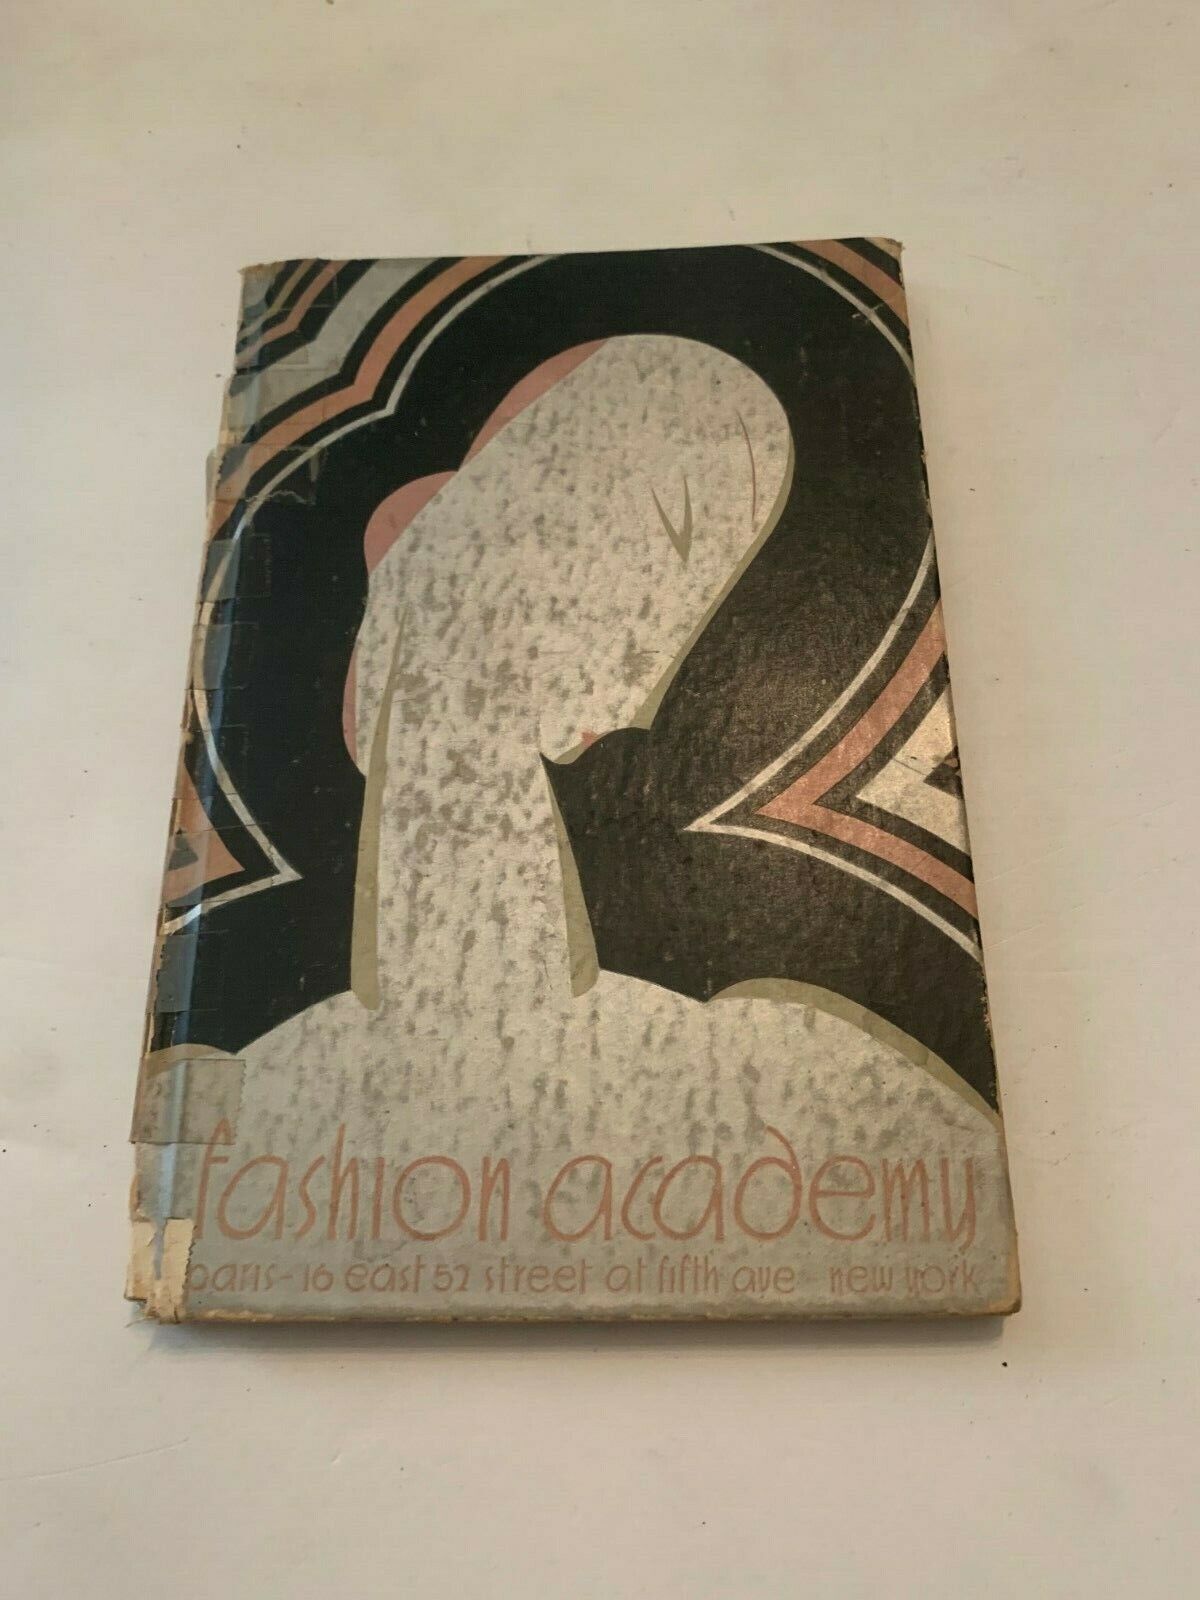 1933 New York Fashion Academy Promotional Hardcover